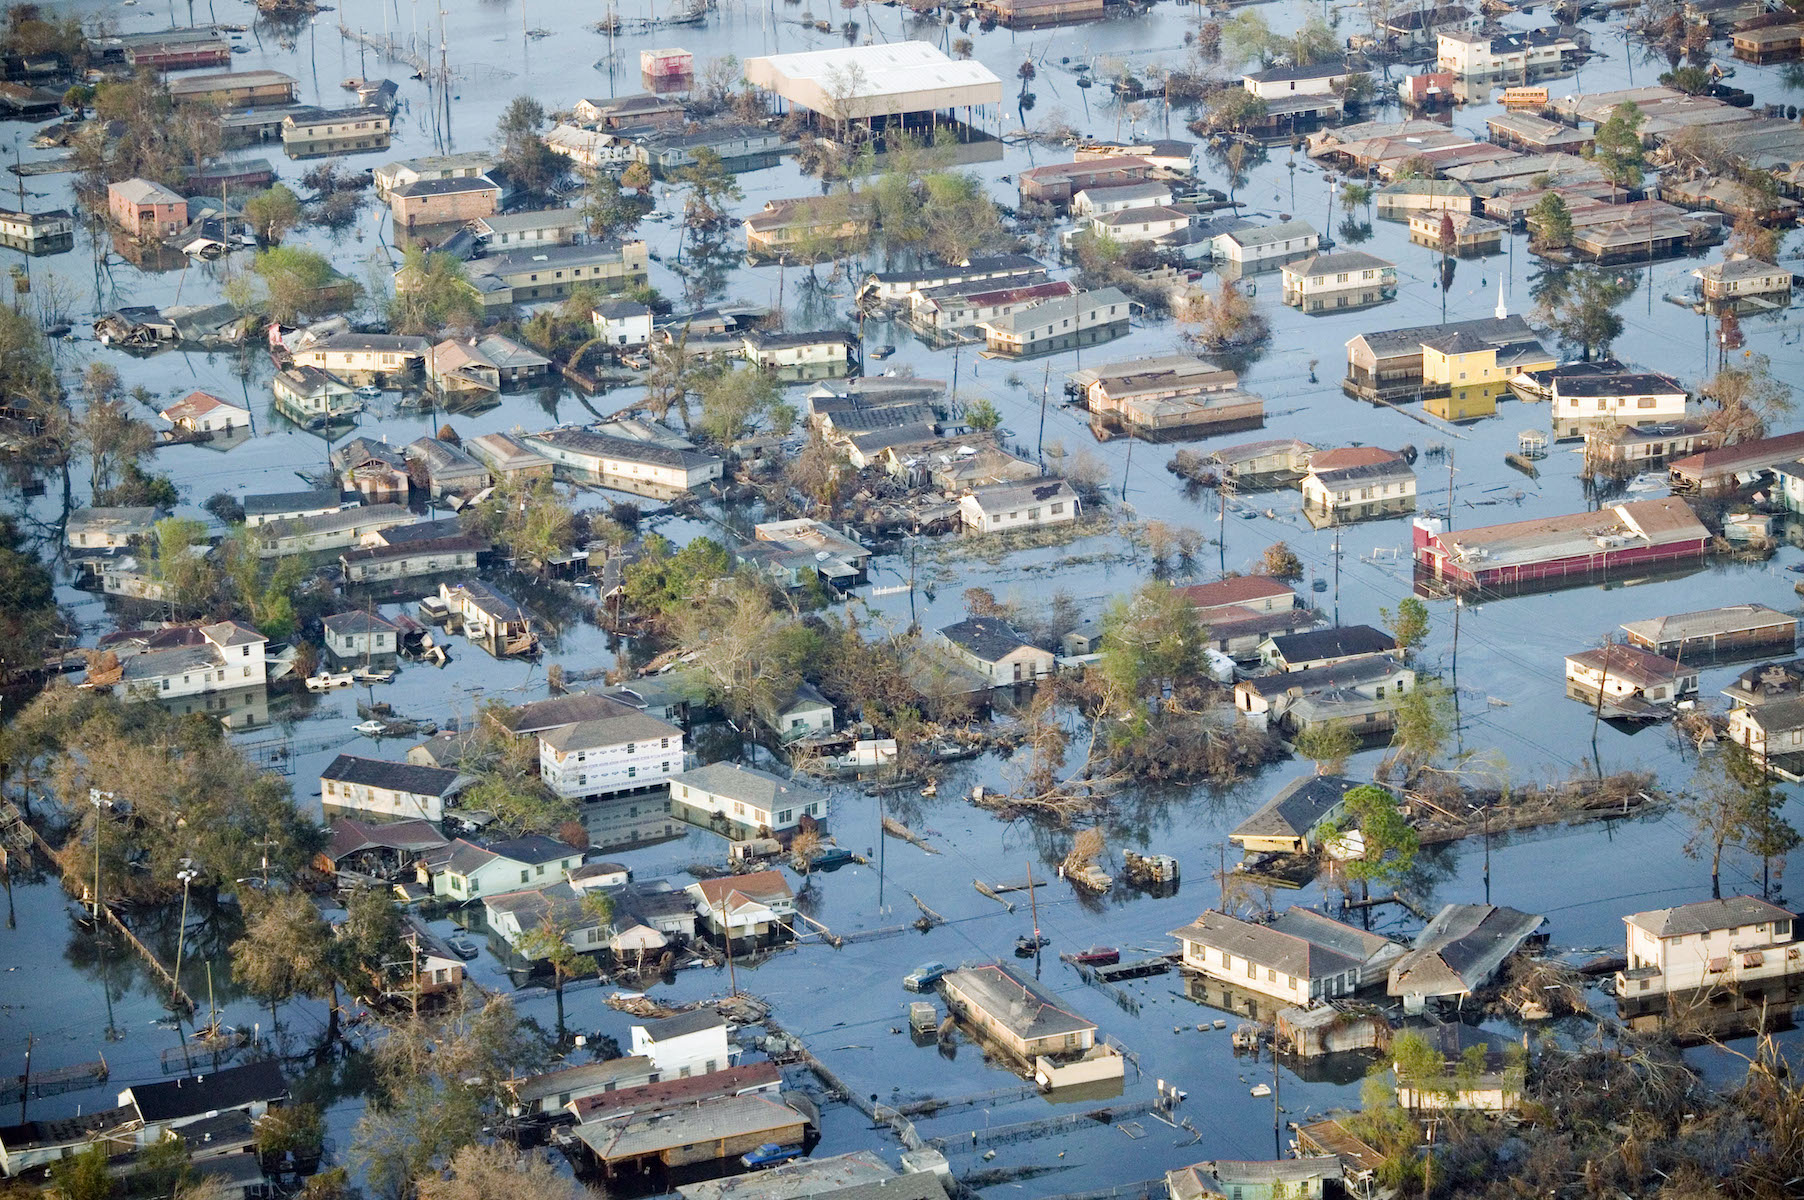 Hurricane Katrina Aftermath - Aerials